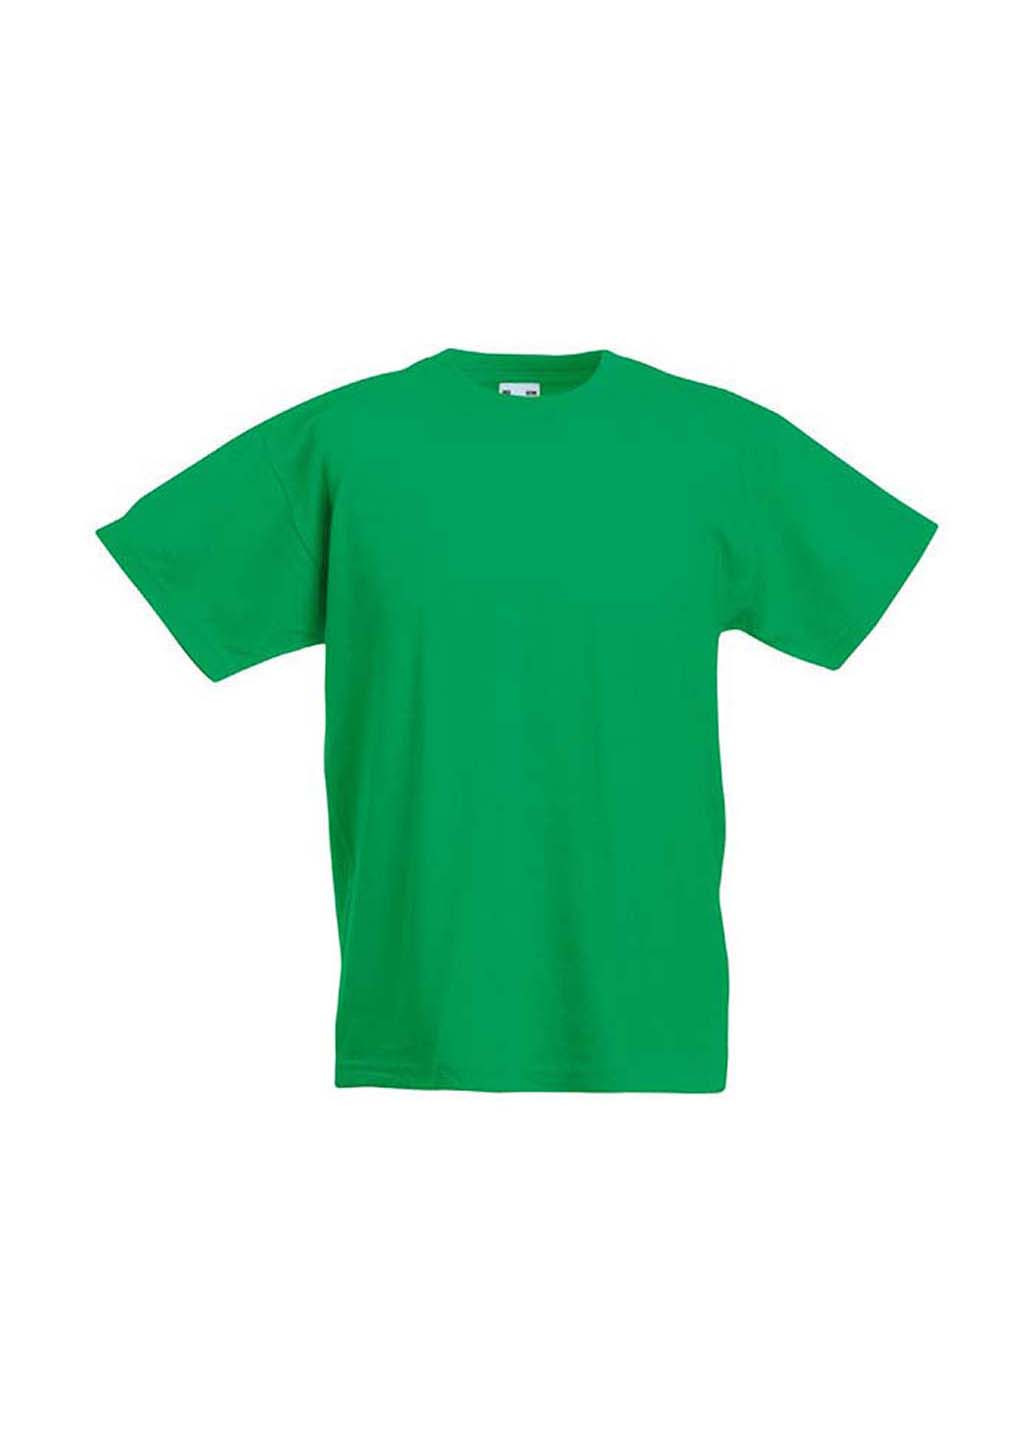 Зеленая демисезонная футболка Fruit of the Loom 61033047164